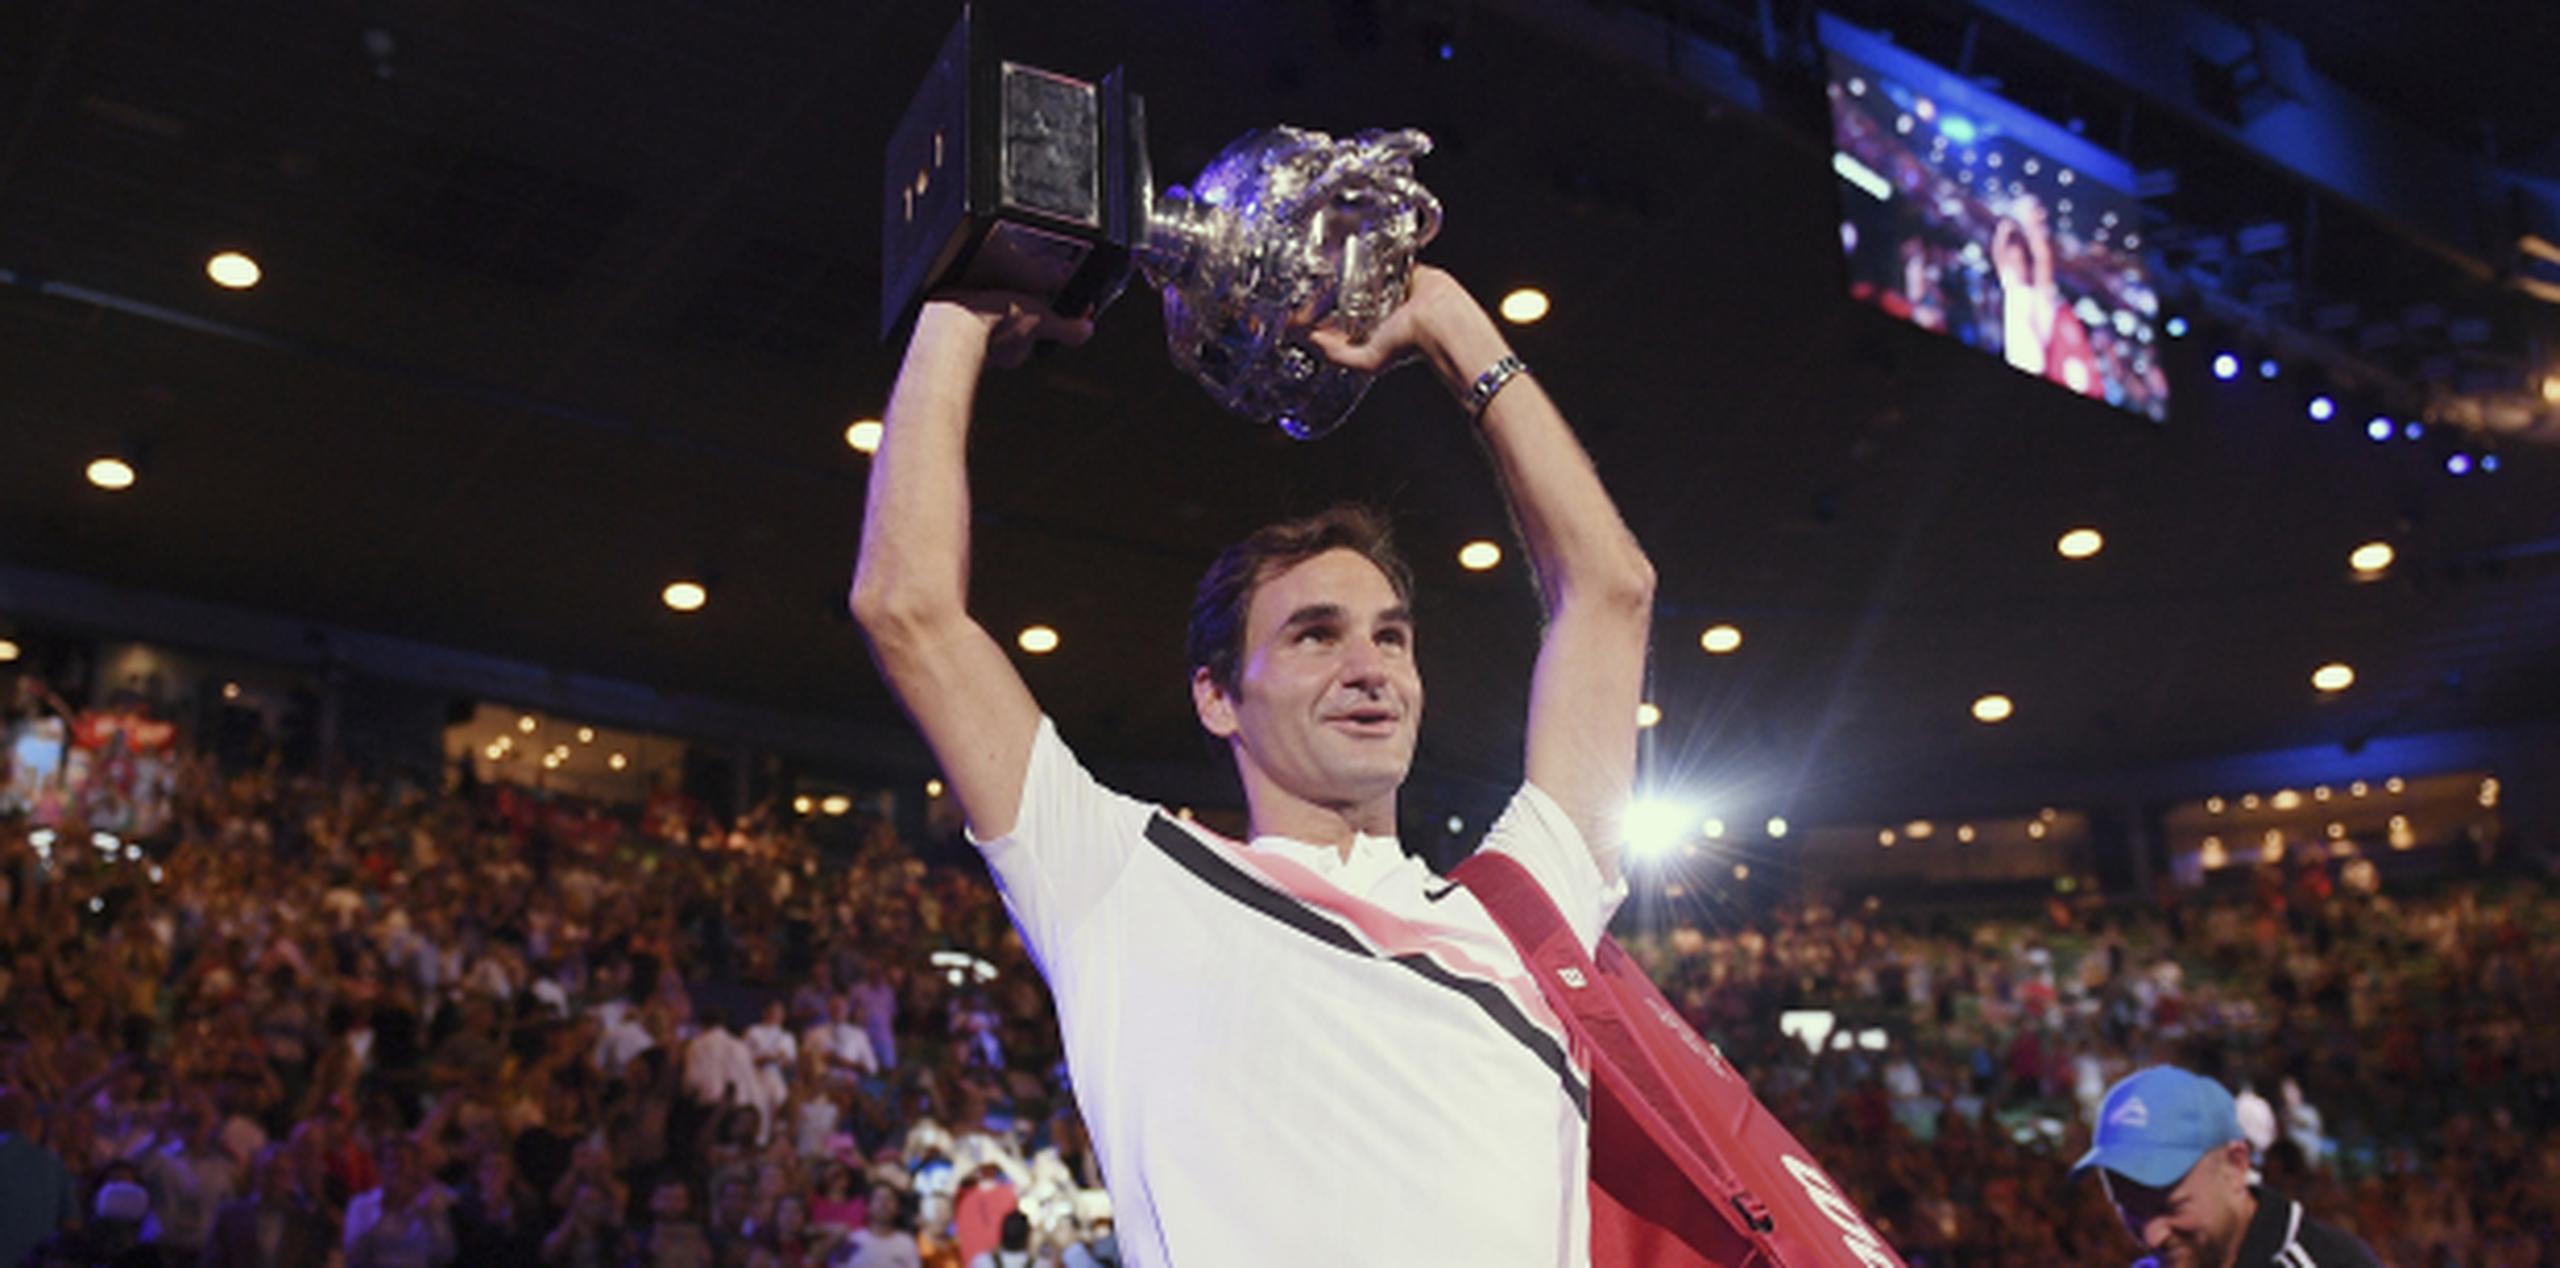 Federer superó al croata en cinco sets, 6-2, 6-7, 6-3, 3-6, 6-1. (AP)

